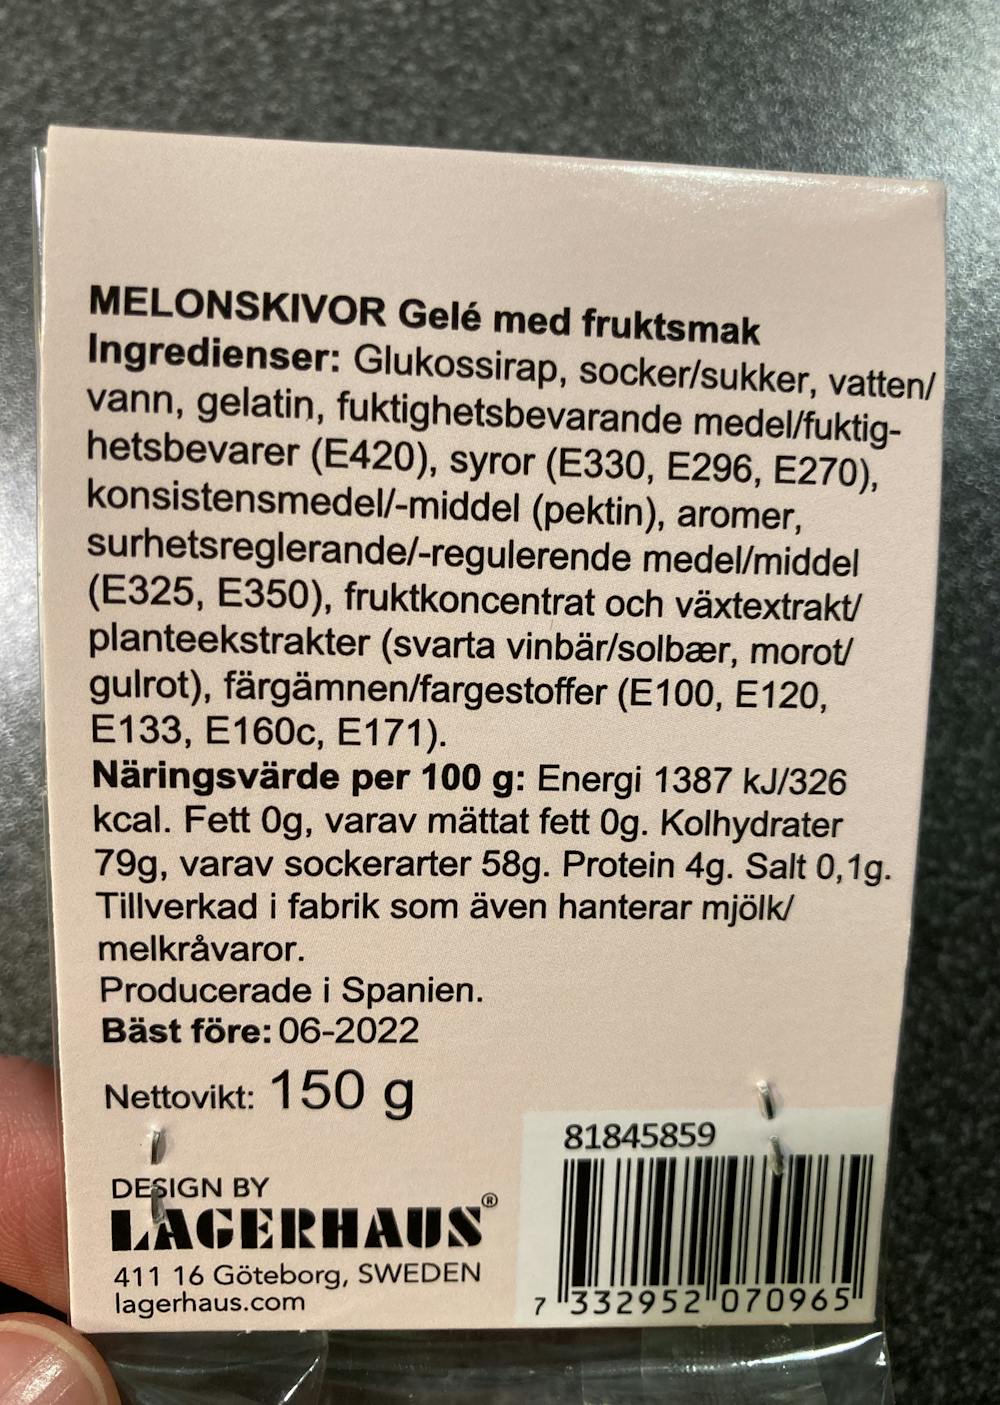 Ingredienslisten til Lagerhaus Melonskivor